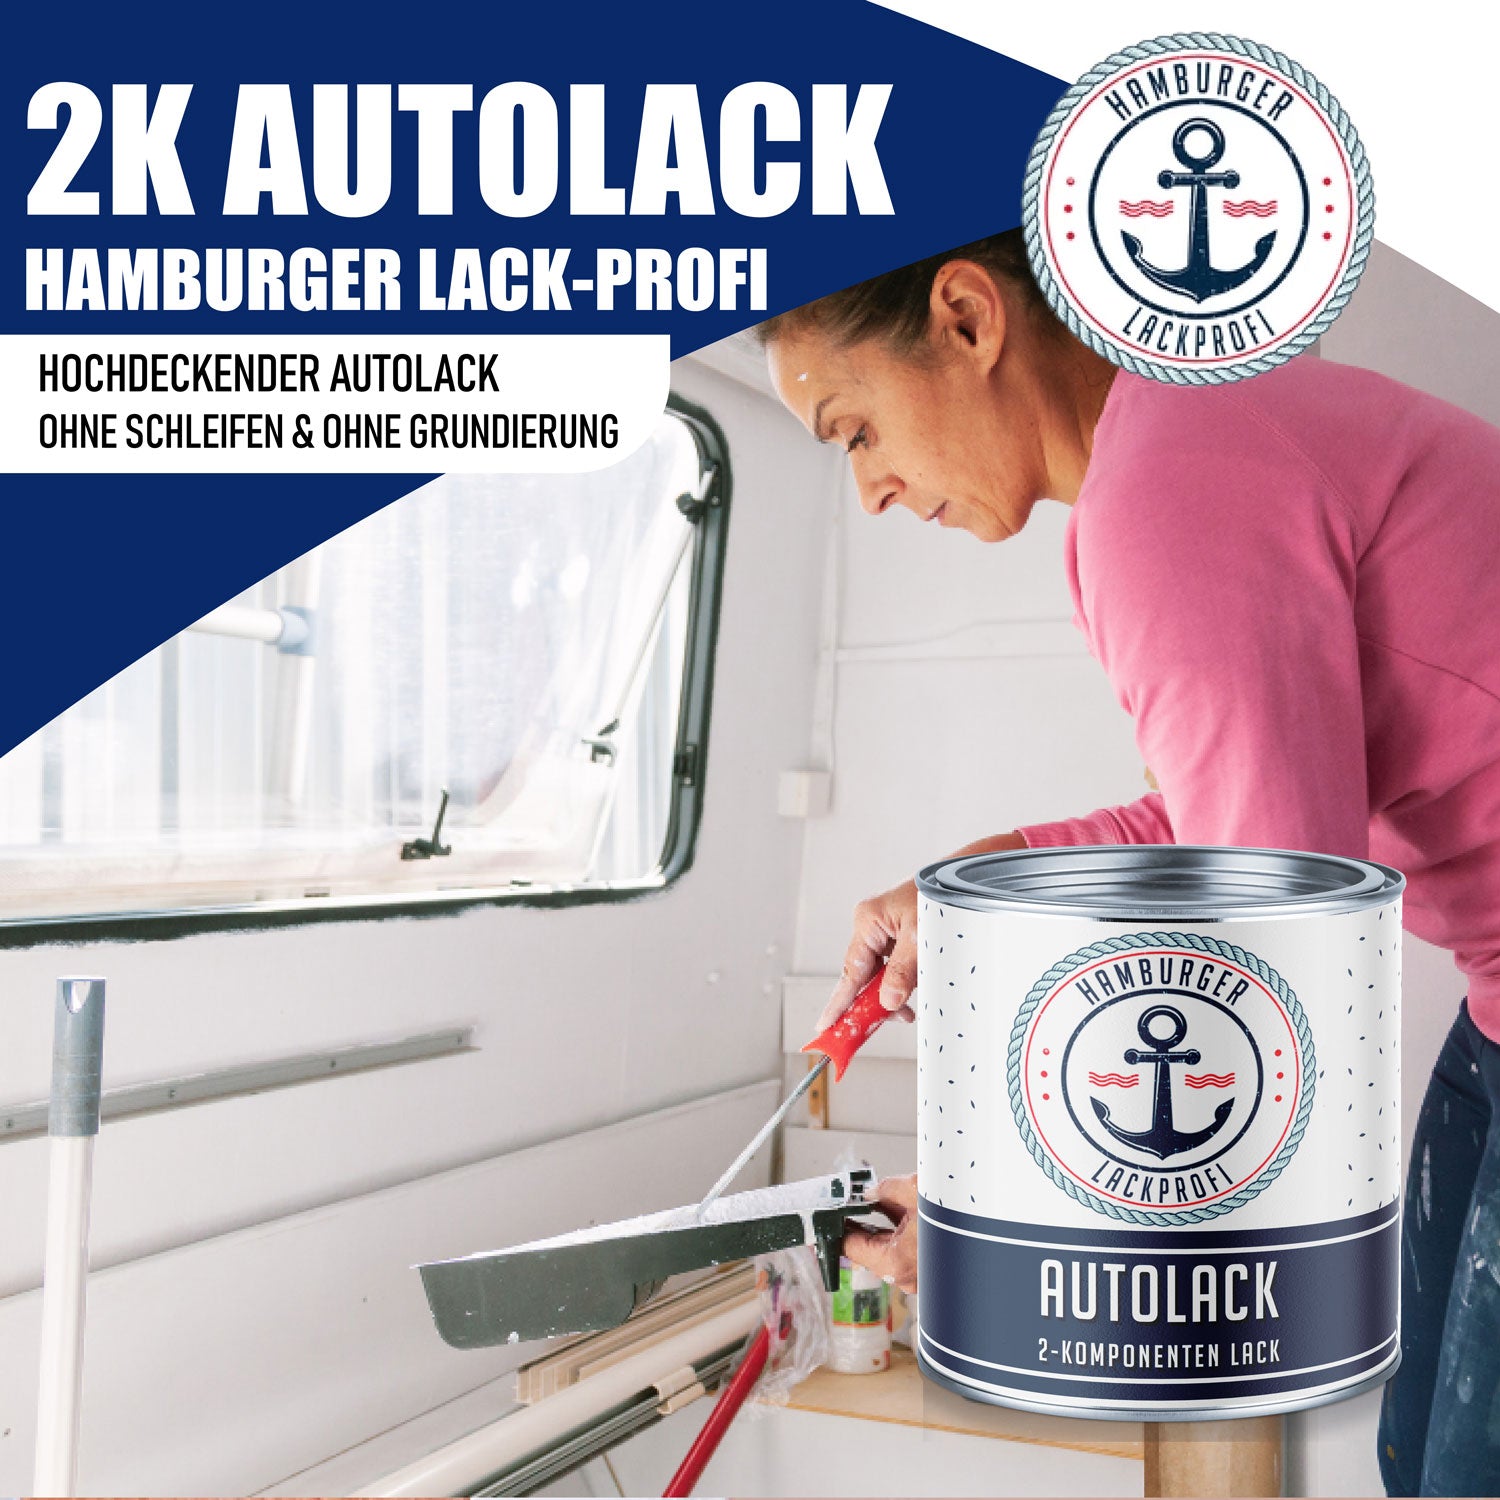 Hamburger Lack-Profi 2K Autolack in Ockergelb RAL 1024 mit Lackierset (X300) & Verdünnung (1 L) - 30% Sparangebot